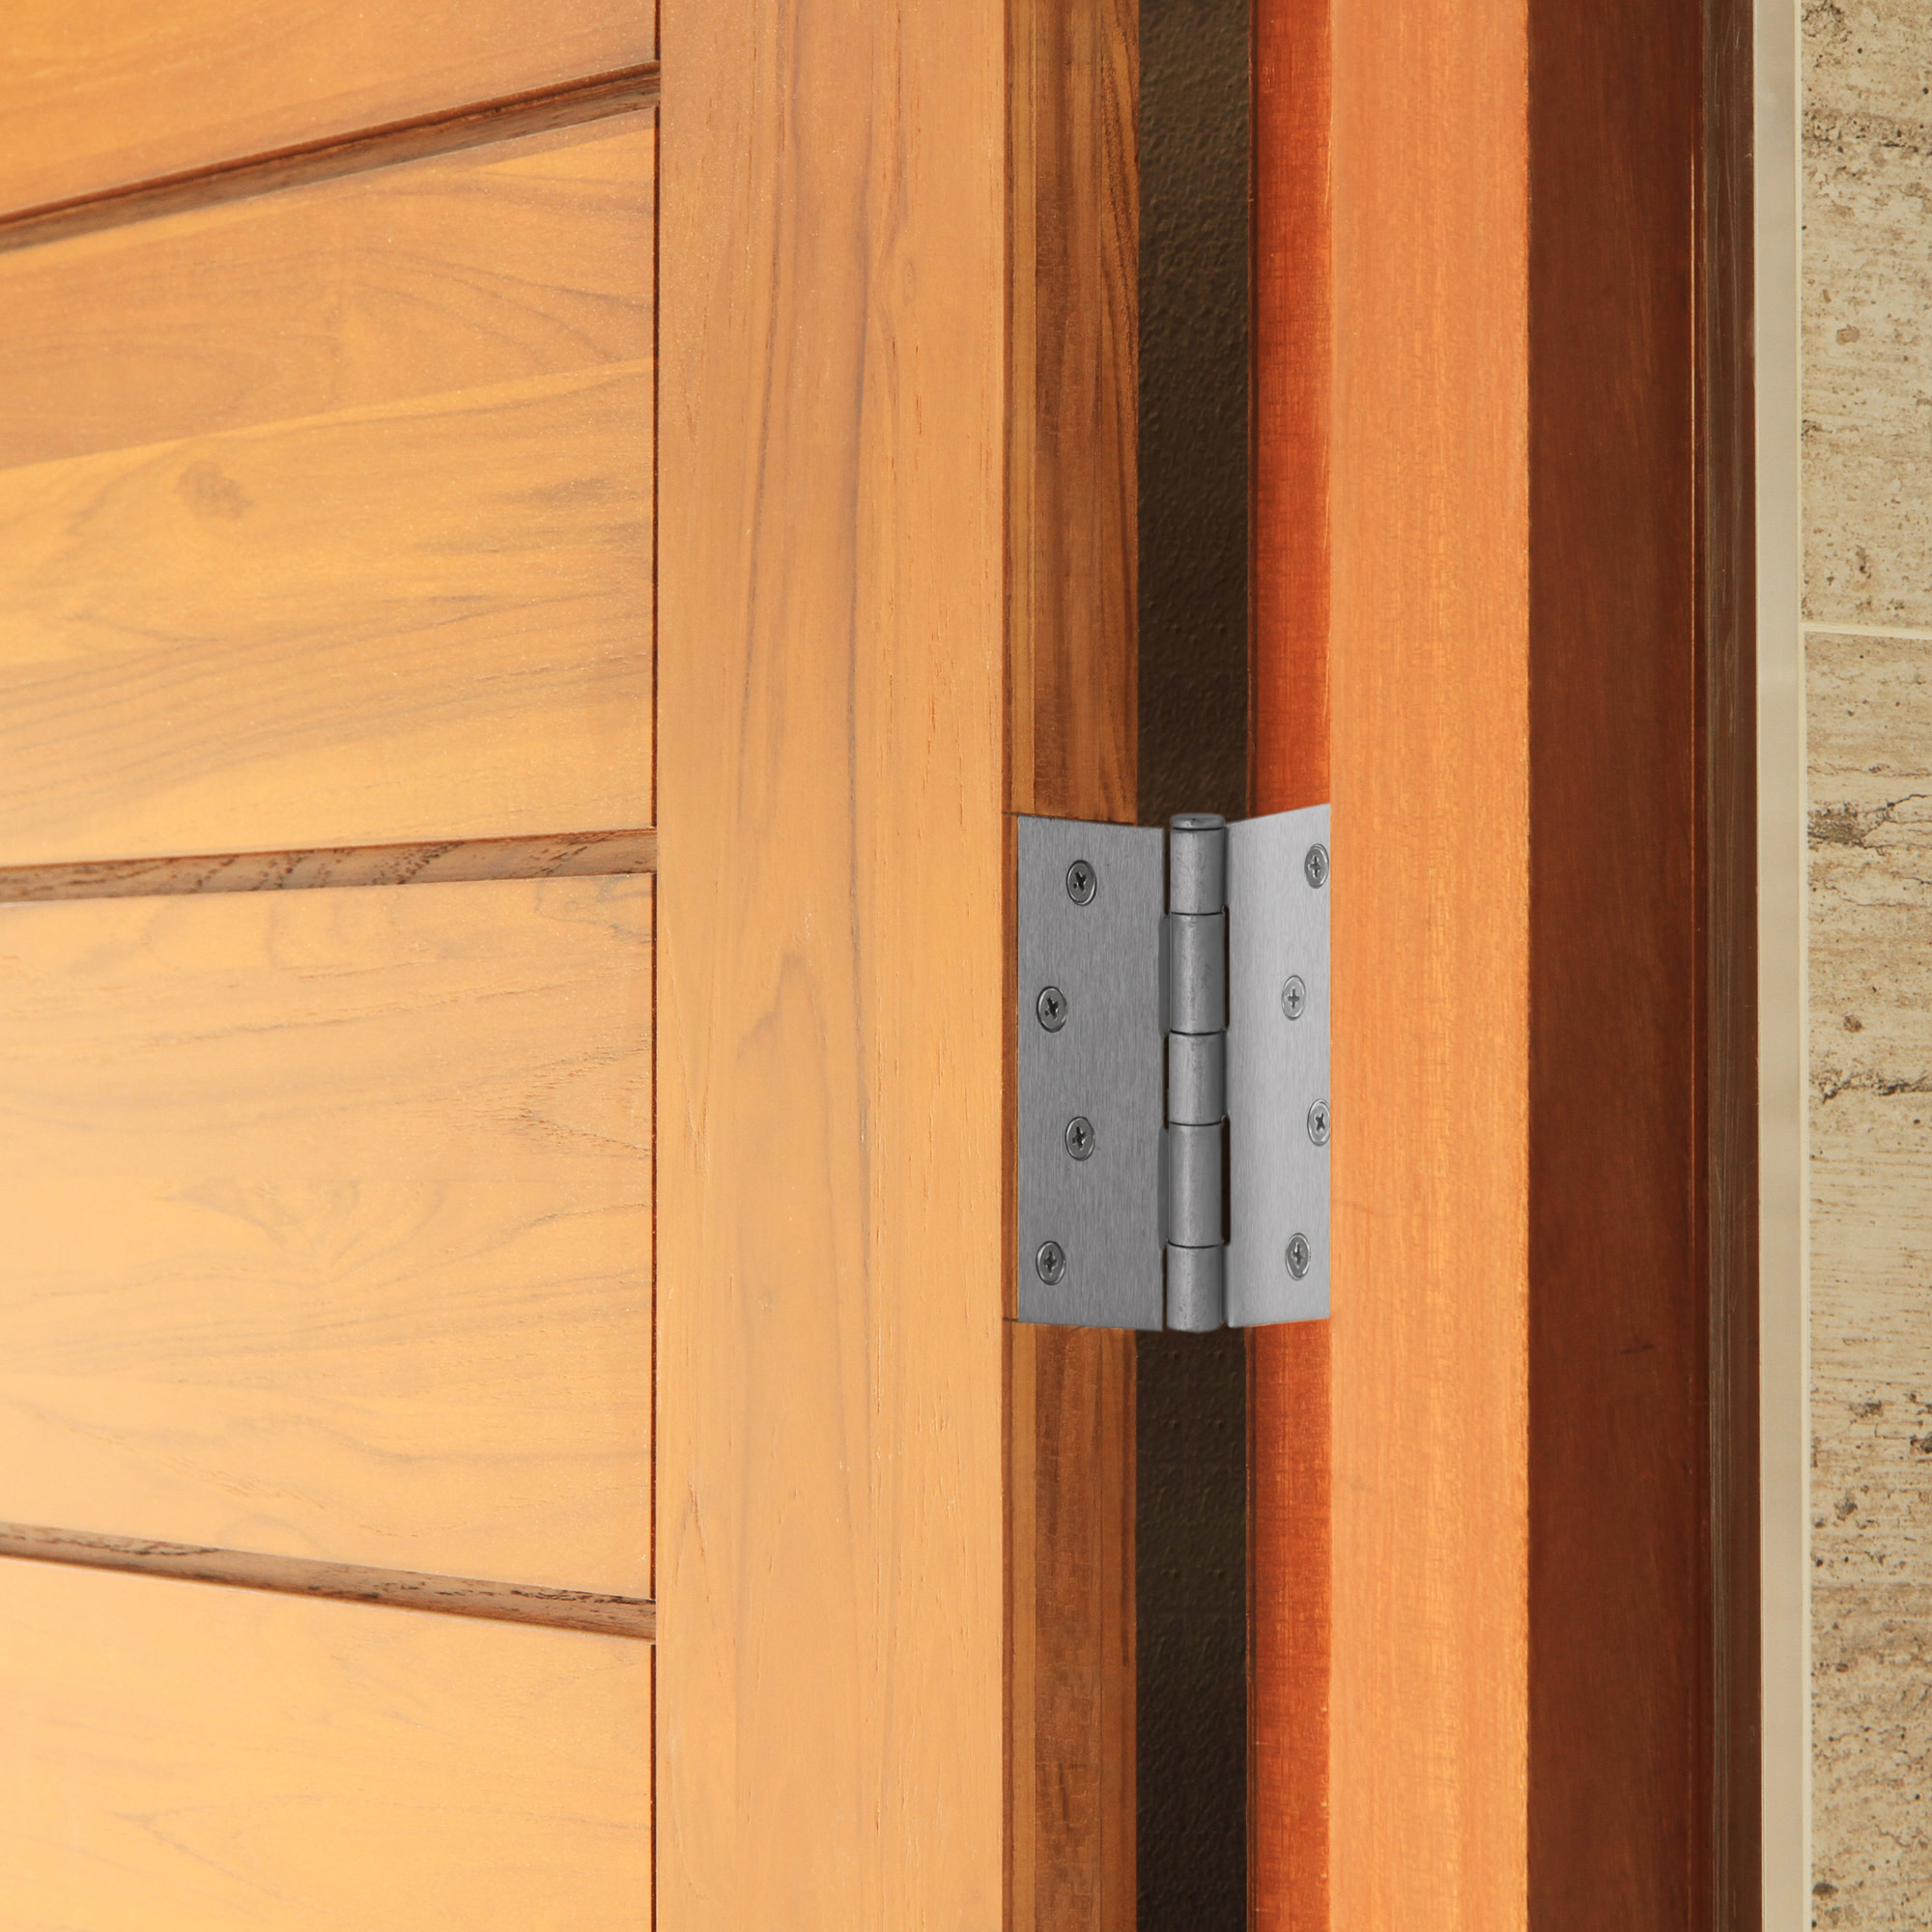 Design House  Door Hinge in Satin Nickel, 4-Inch, Square Corner, 10-Pack - image 4 of 12